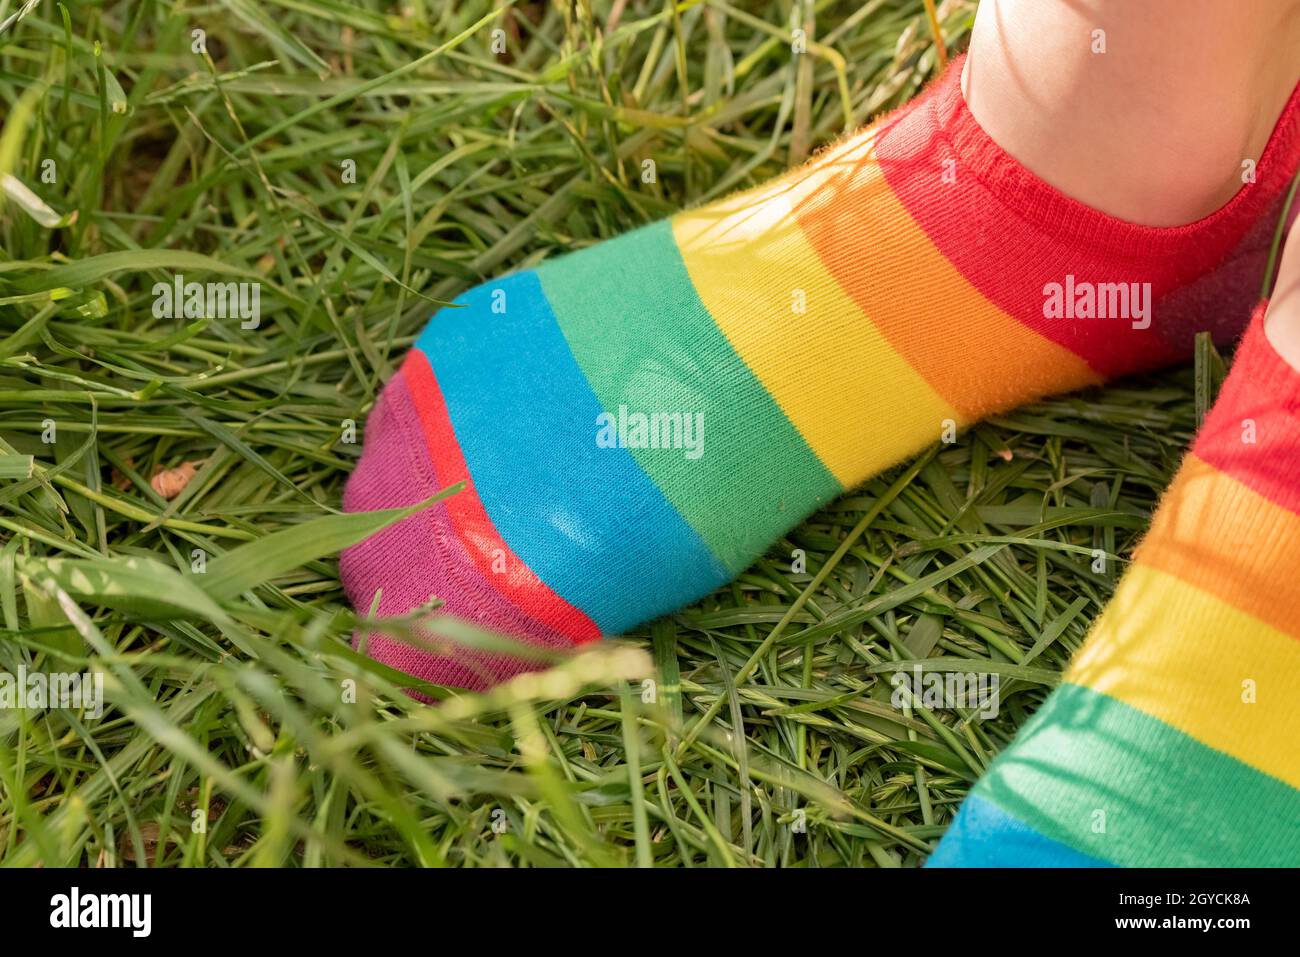 https://c8.alamy.com/comp/2GYCK8A/rainbow-socks-on-the-girls-feet-childs-feet-in-colorful-socks-on-the-green-grass-2GYCK8A.jpg